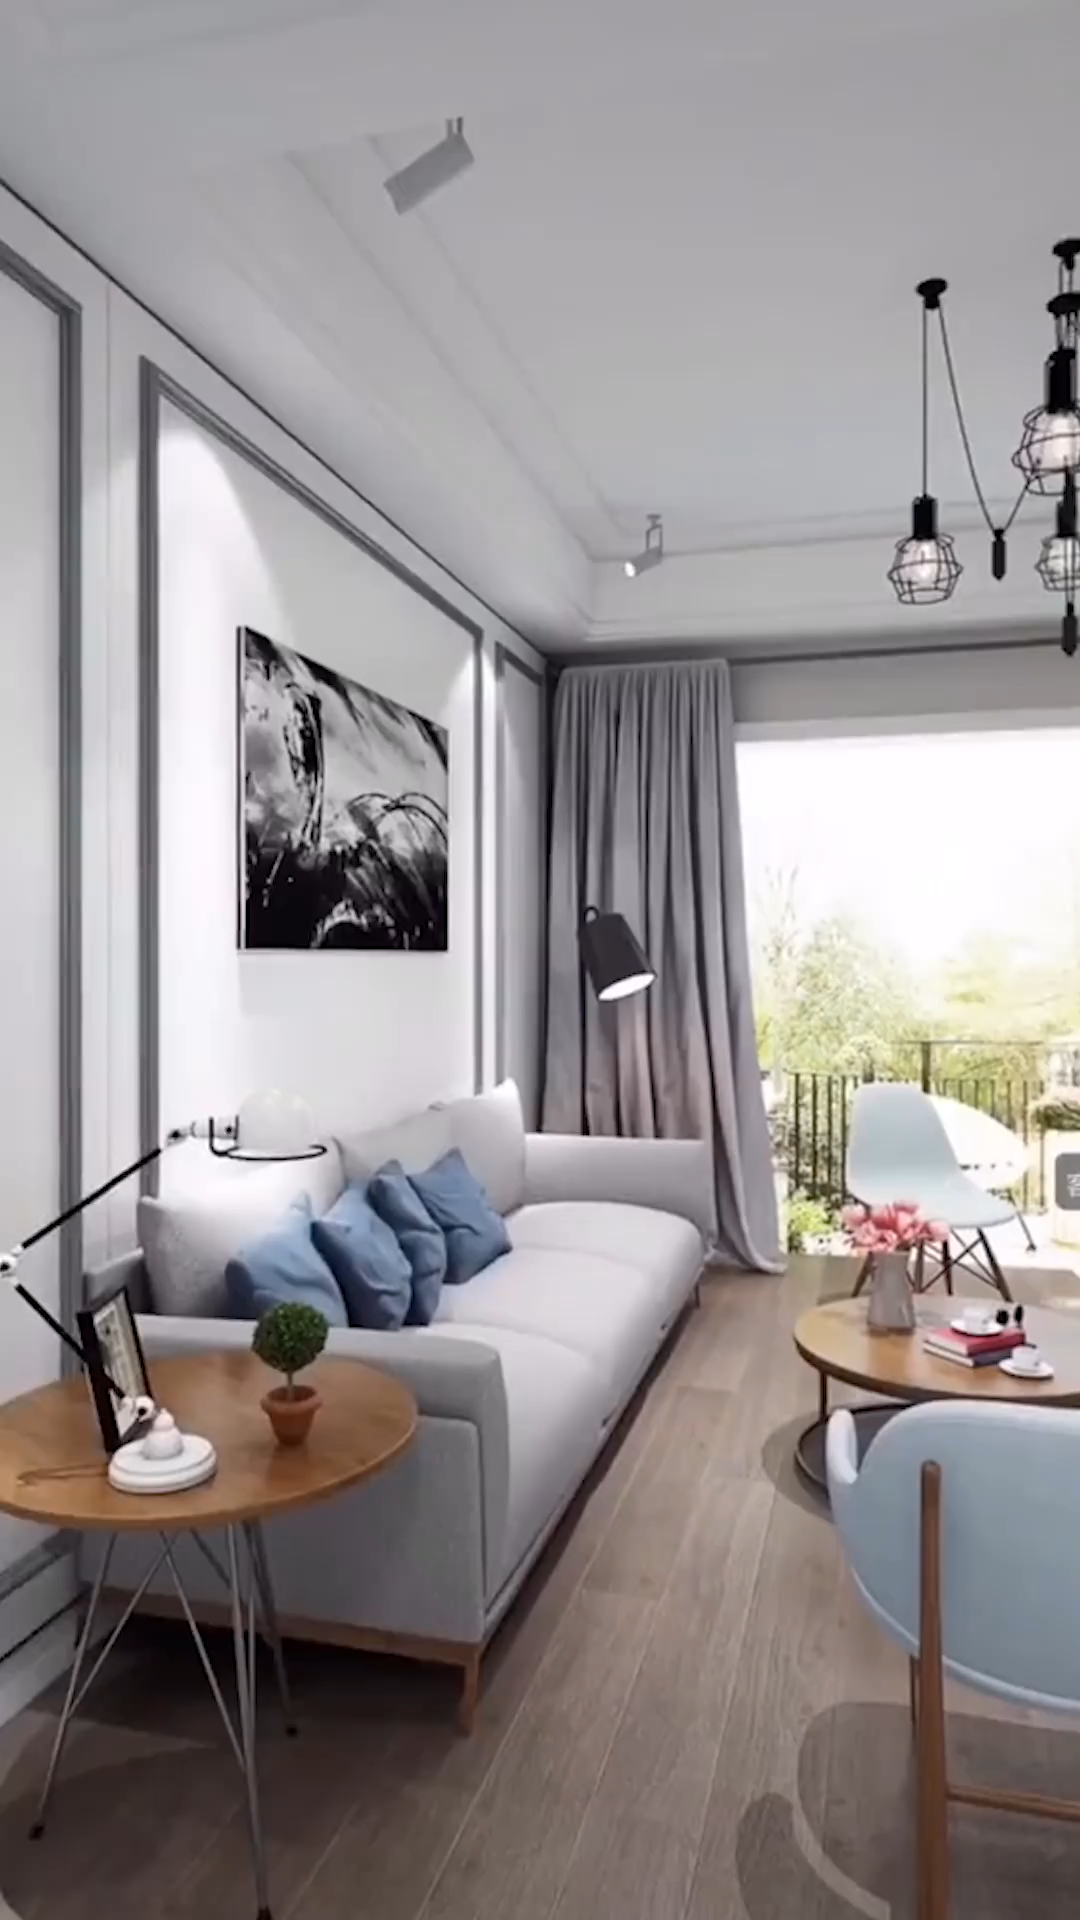 Living room decoration videos -   24 room decor Videos livingroom ideas